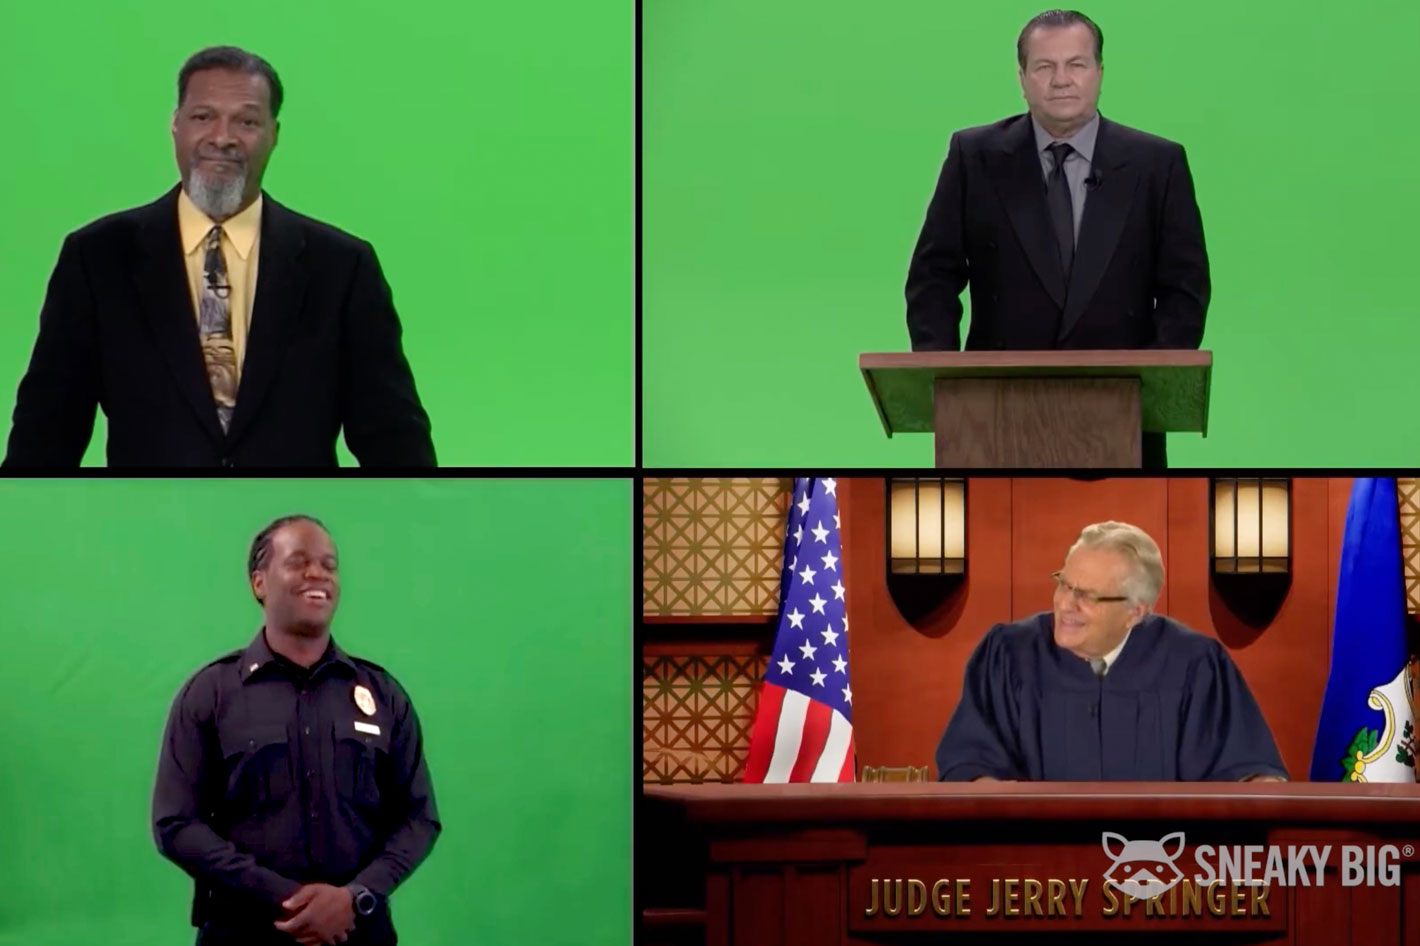 “Judge Jerry” TV series filmed in a “quarantine court”